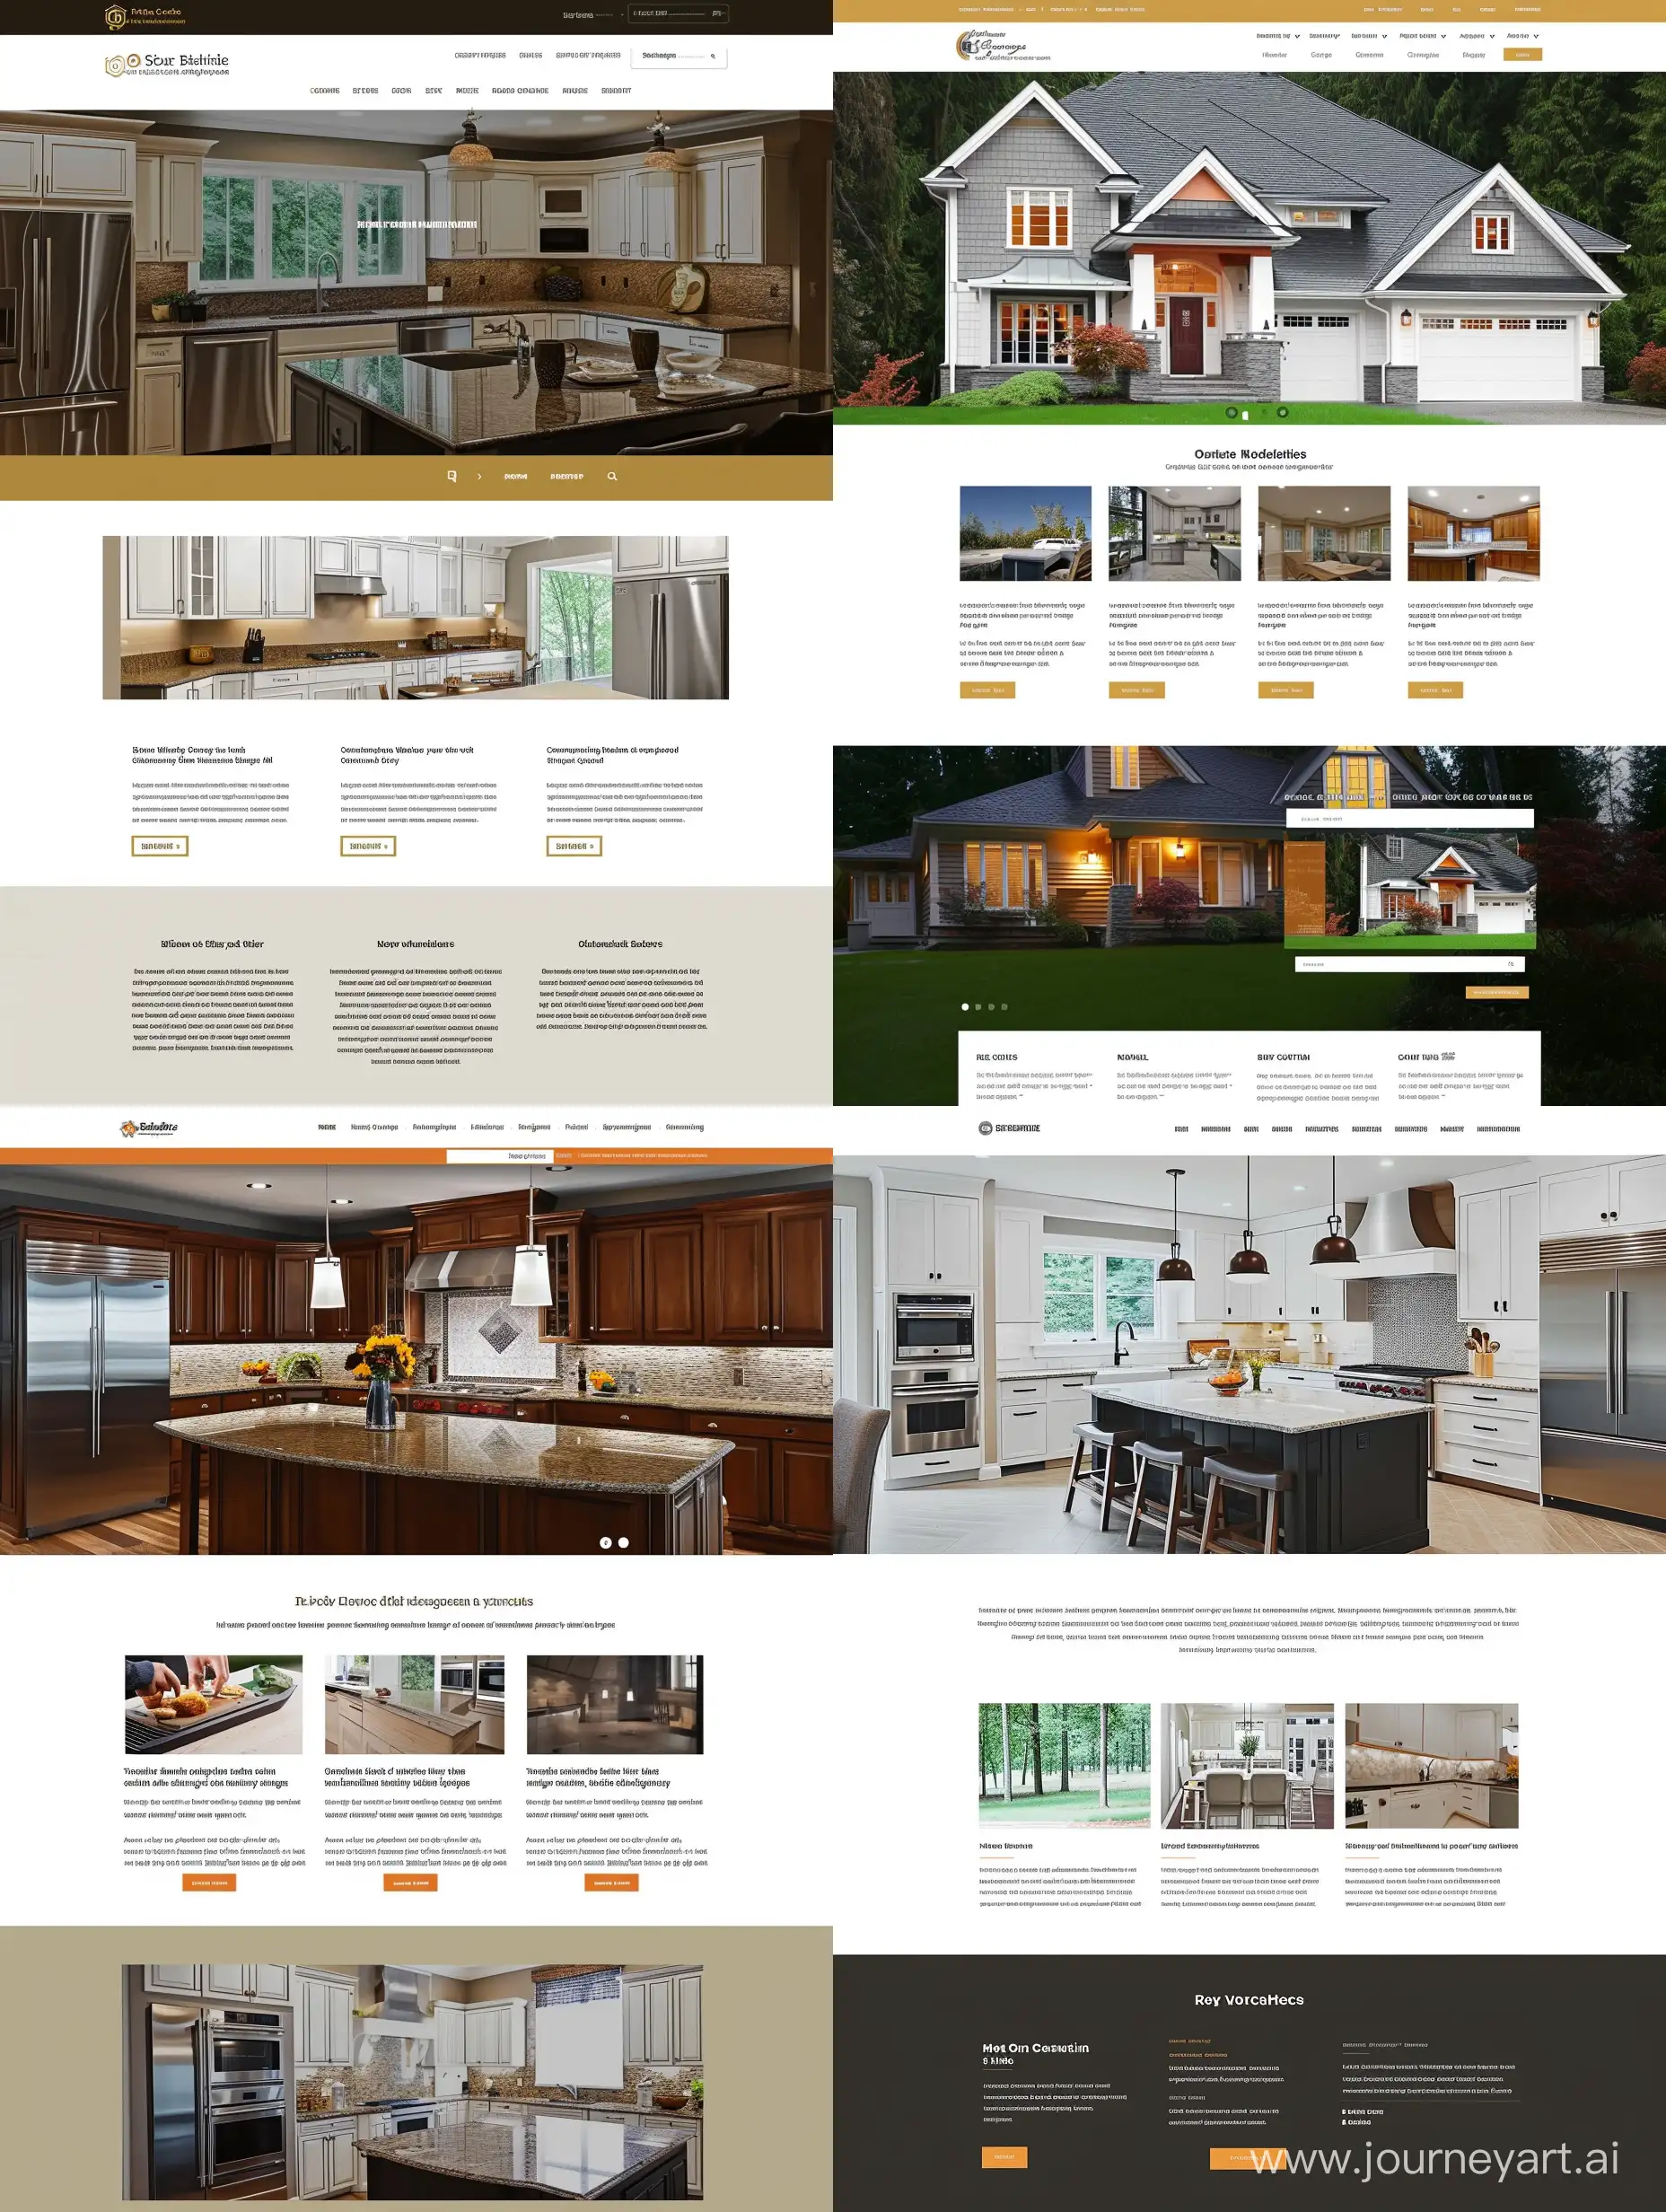 Refacing and remodel contractor's website homepage design